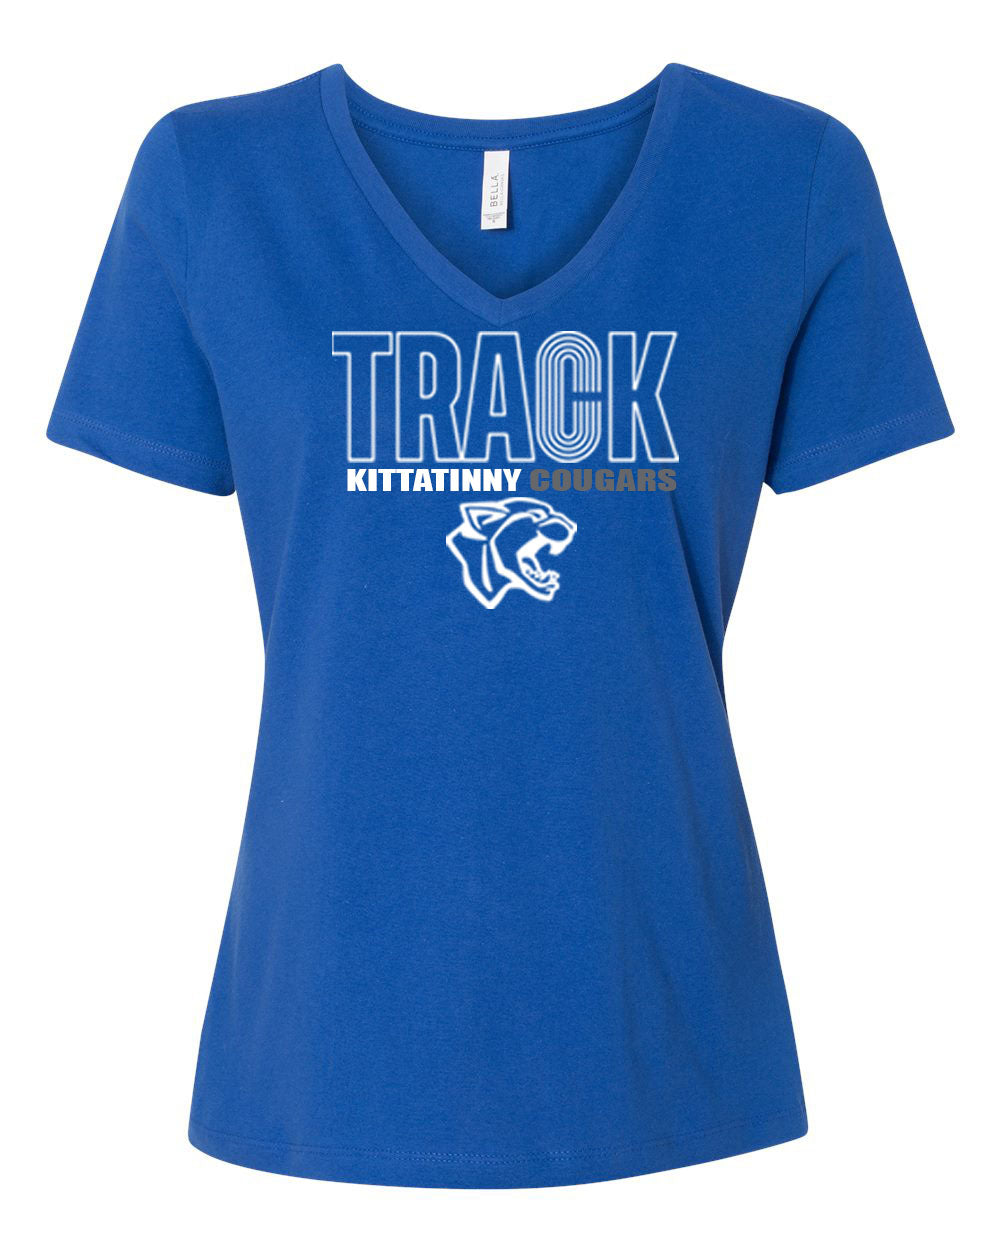 Kittatinny Track Design 1 V-neck T-Shirt